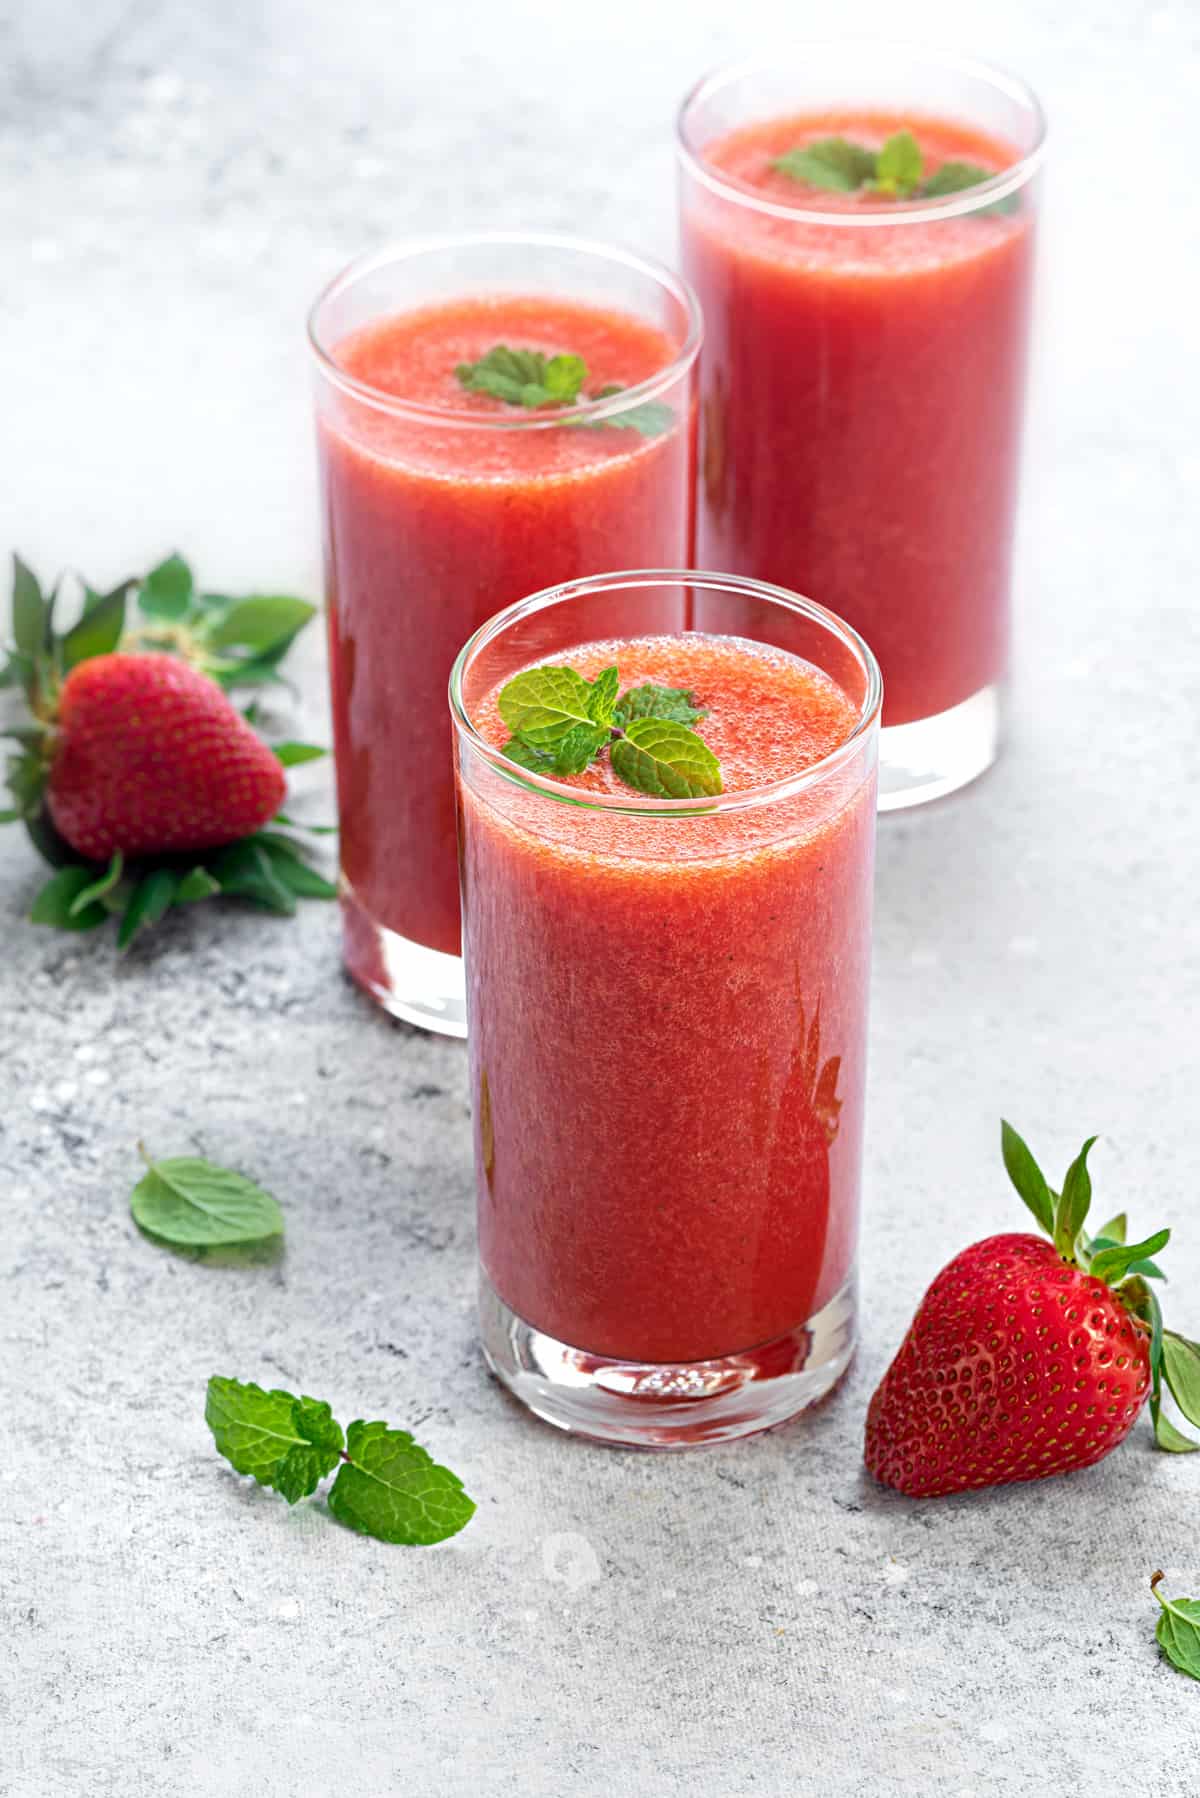 Strawberry Juice - Simple Juicing Recipe to Make Fresh Juice at Home